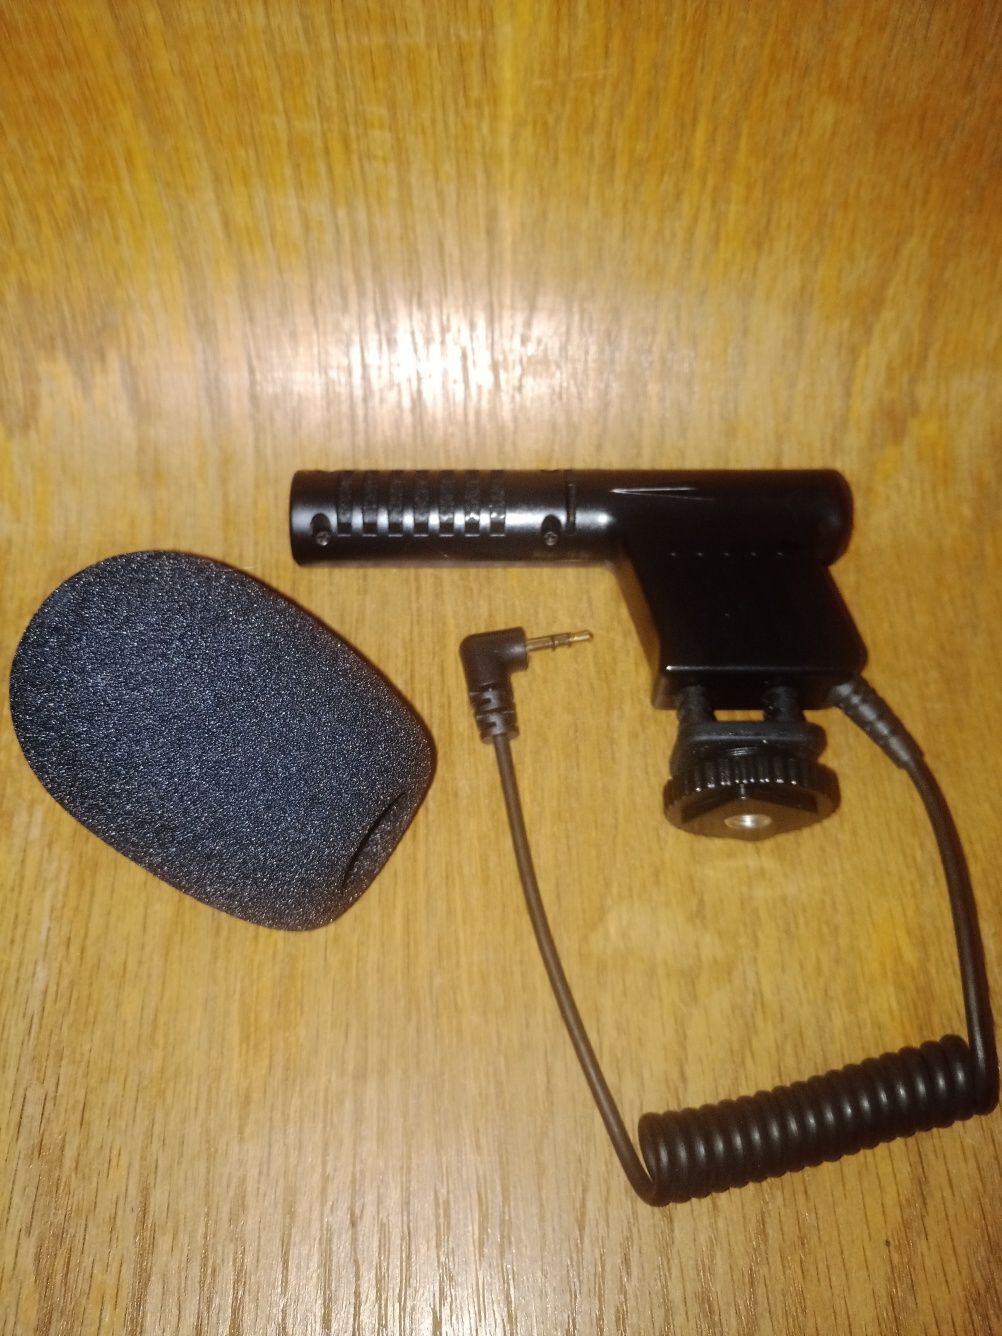 2x Mikrofon do smartfona kamery dyktafonu